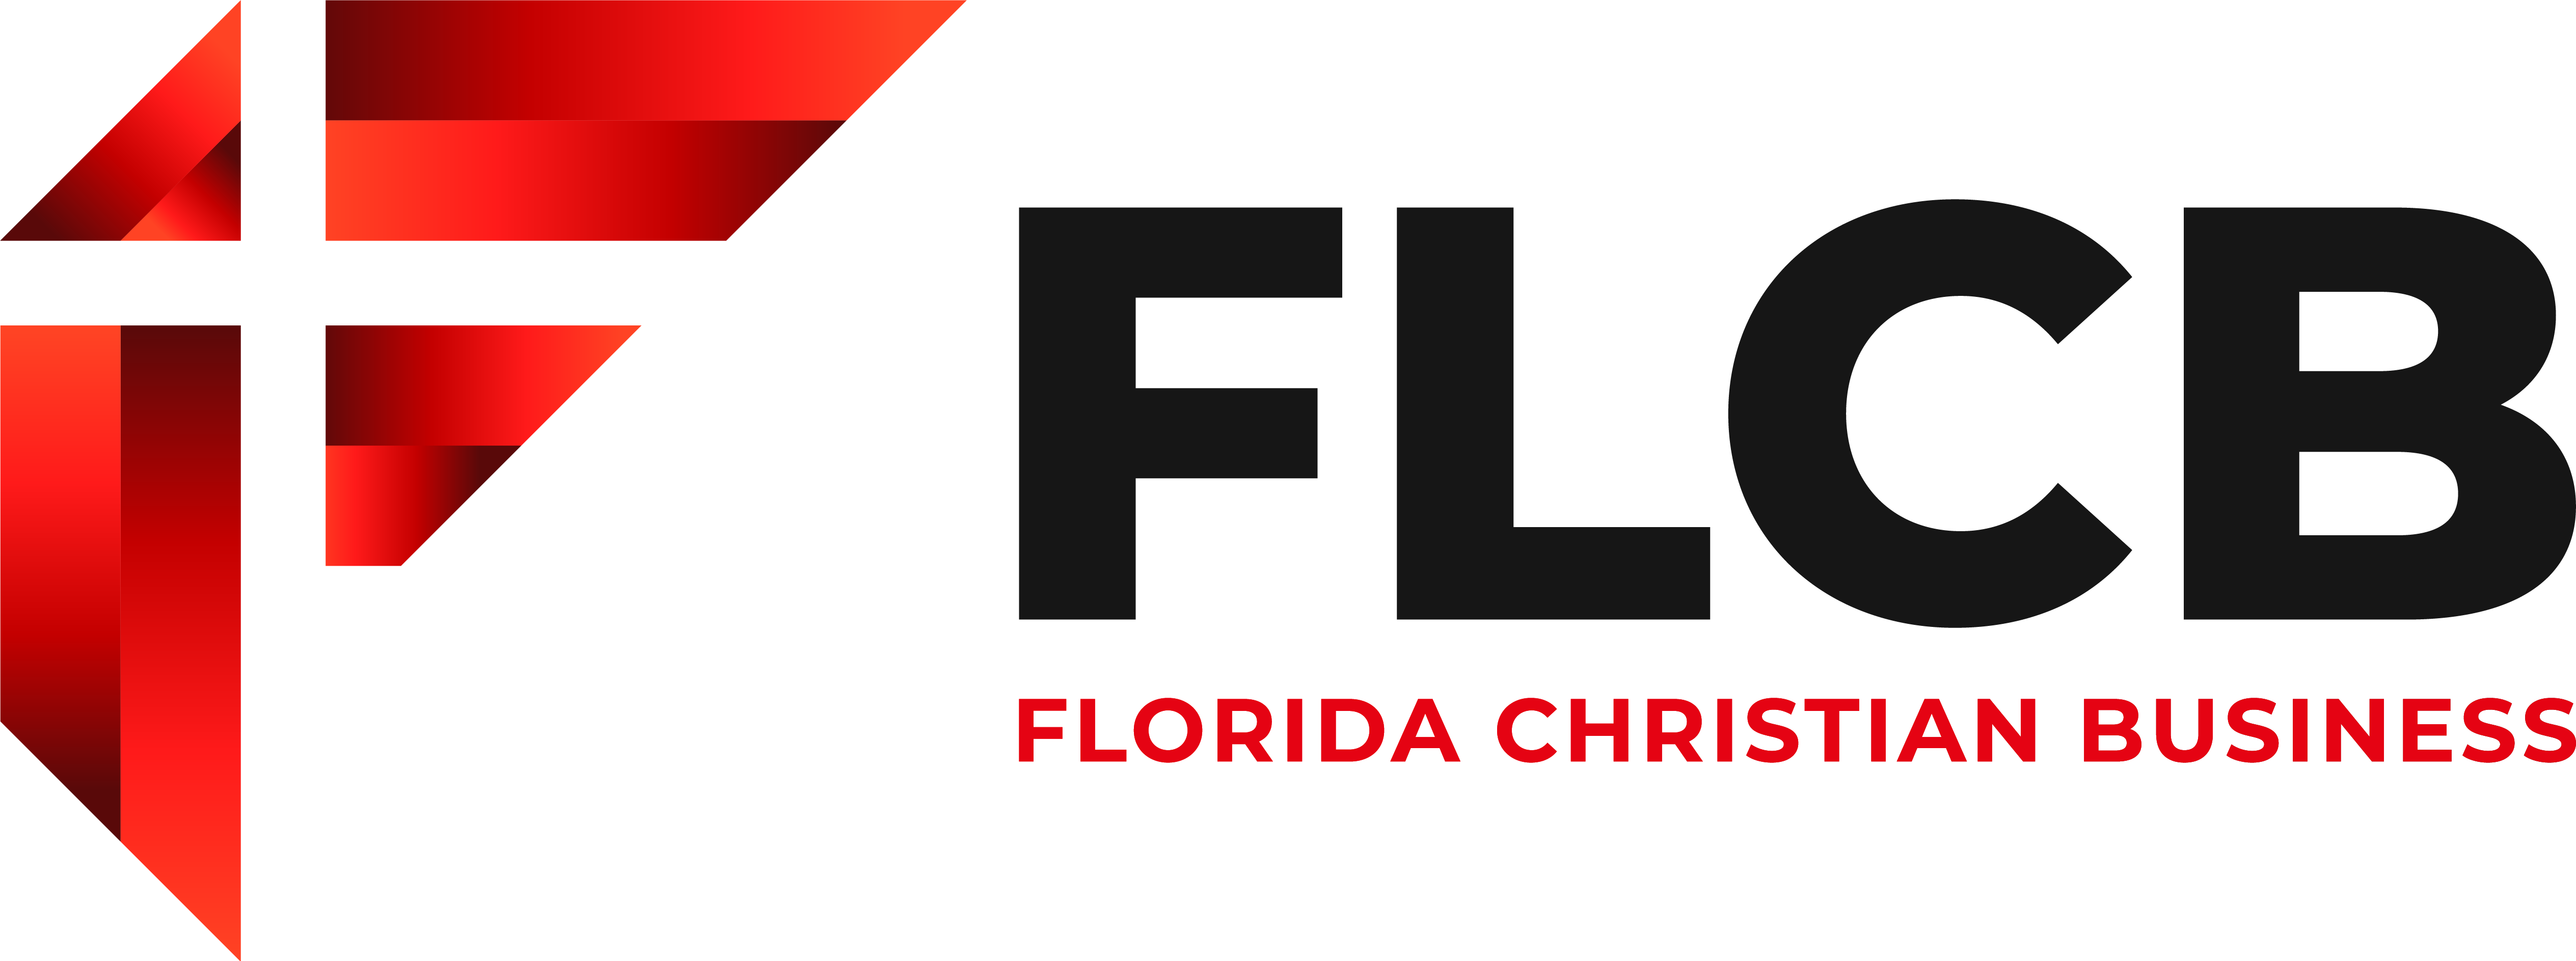 Florida Christian Business